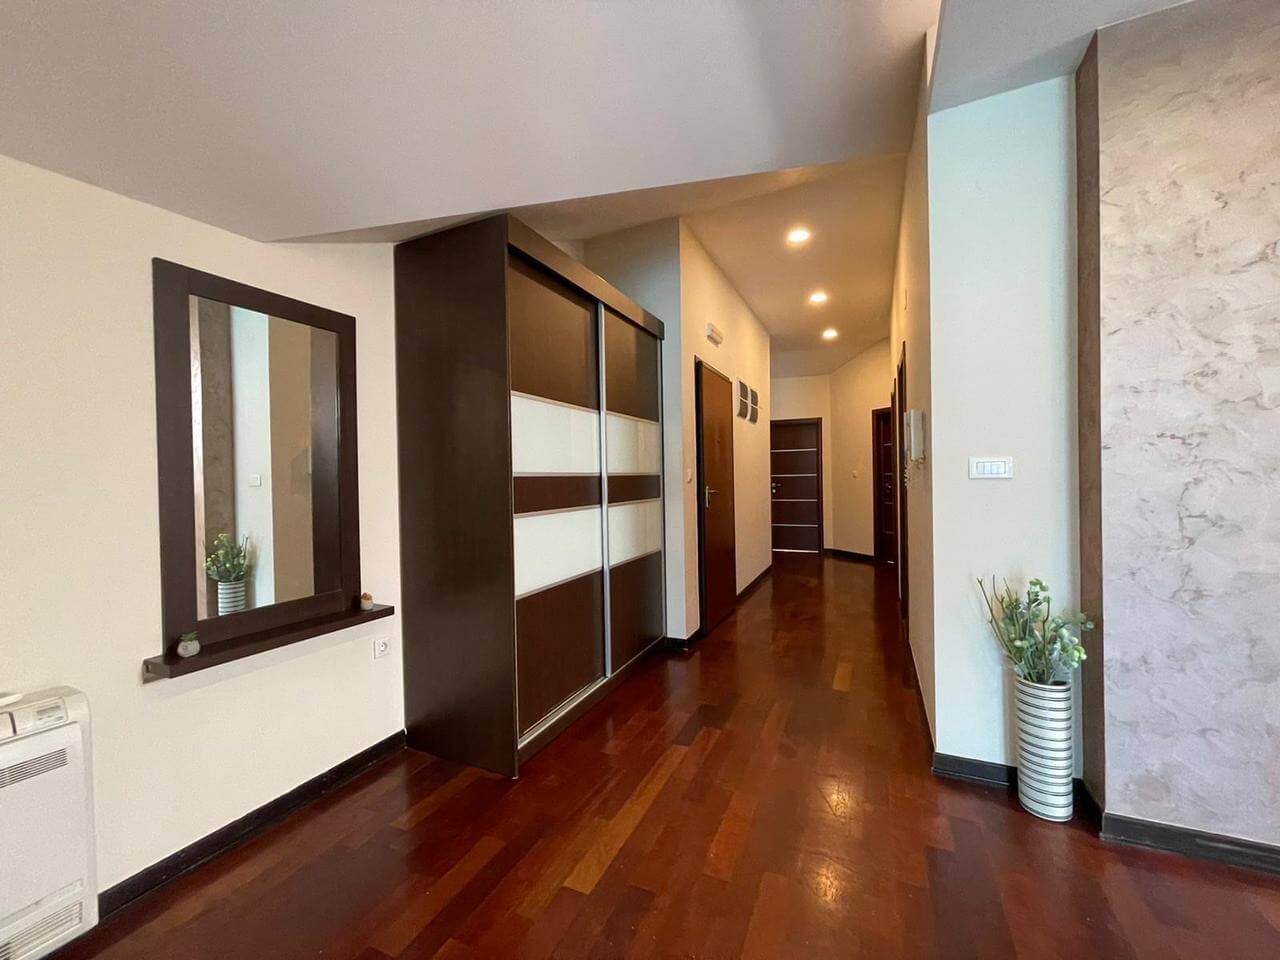 Купить 3-х комнатную квартиру в Будве: общий вид, коридор